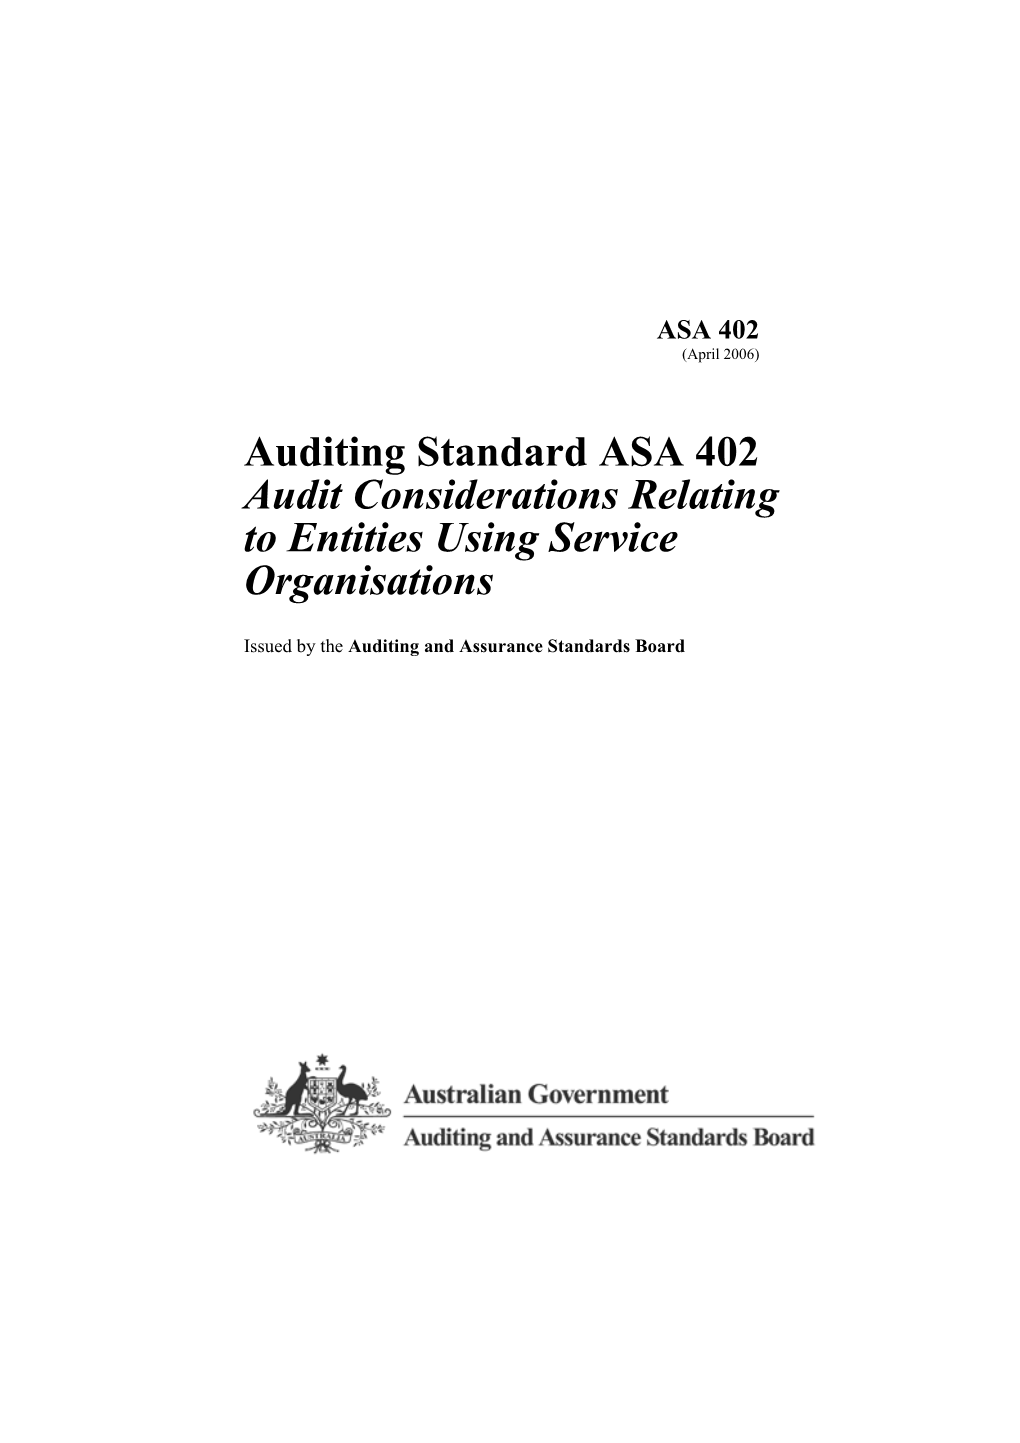 Auditing Standard ASA 402